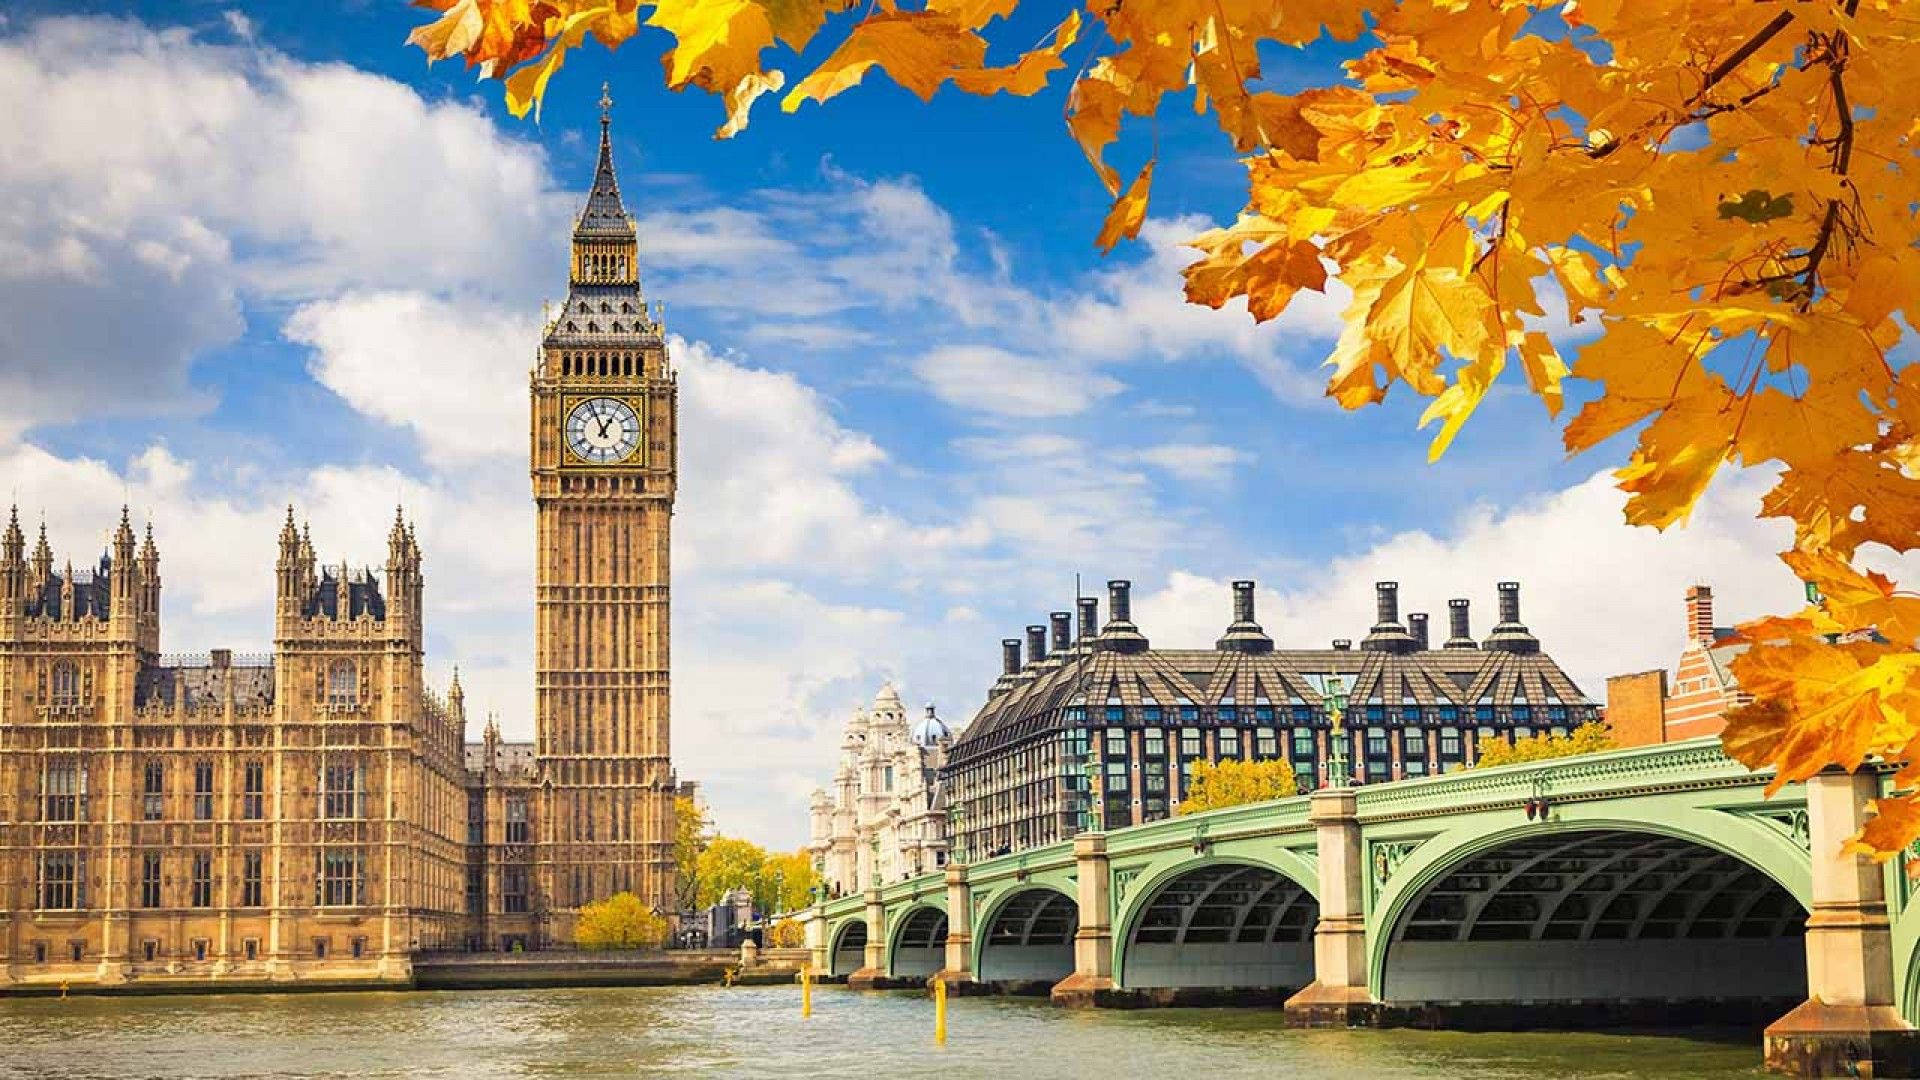 London's Big Ben In Europe Background